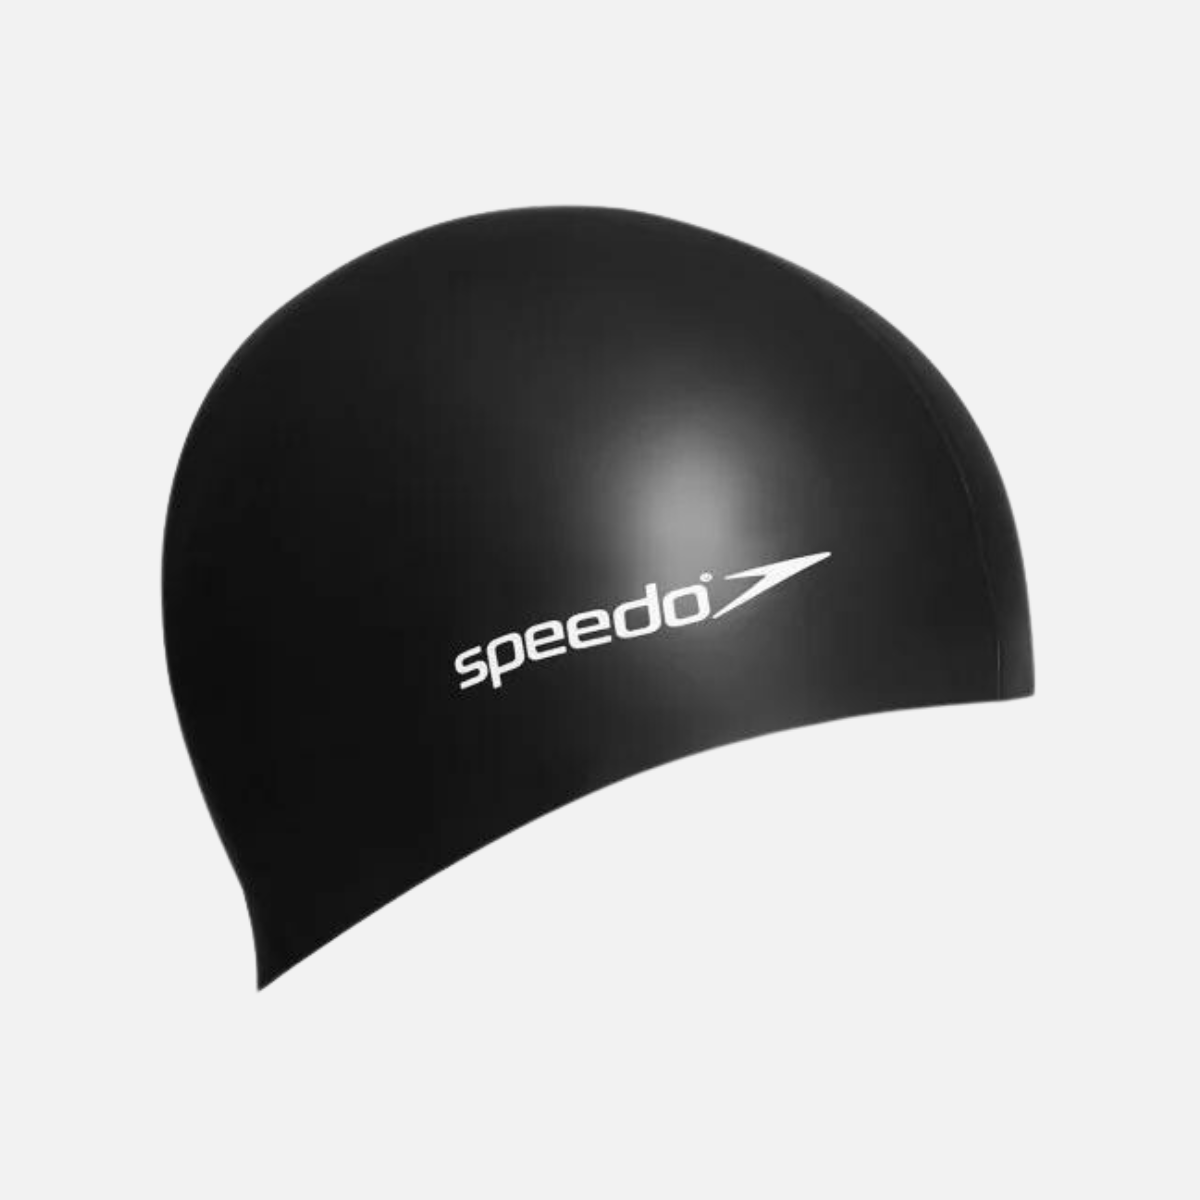 Speedo Flat Silicon Kids Cap -Assorted